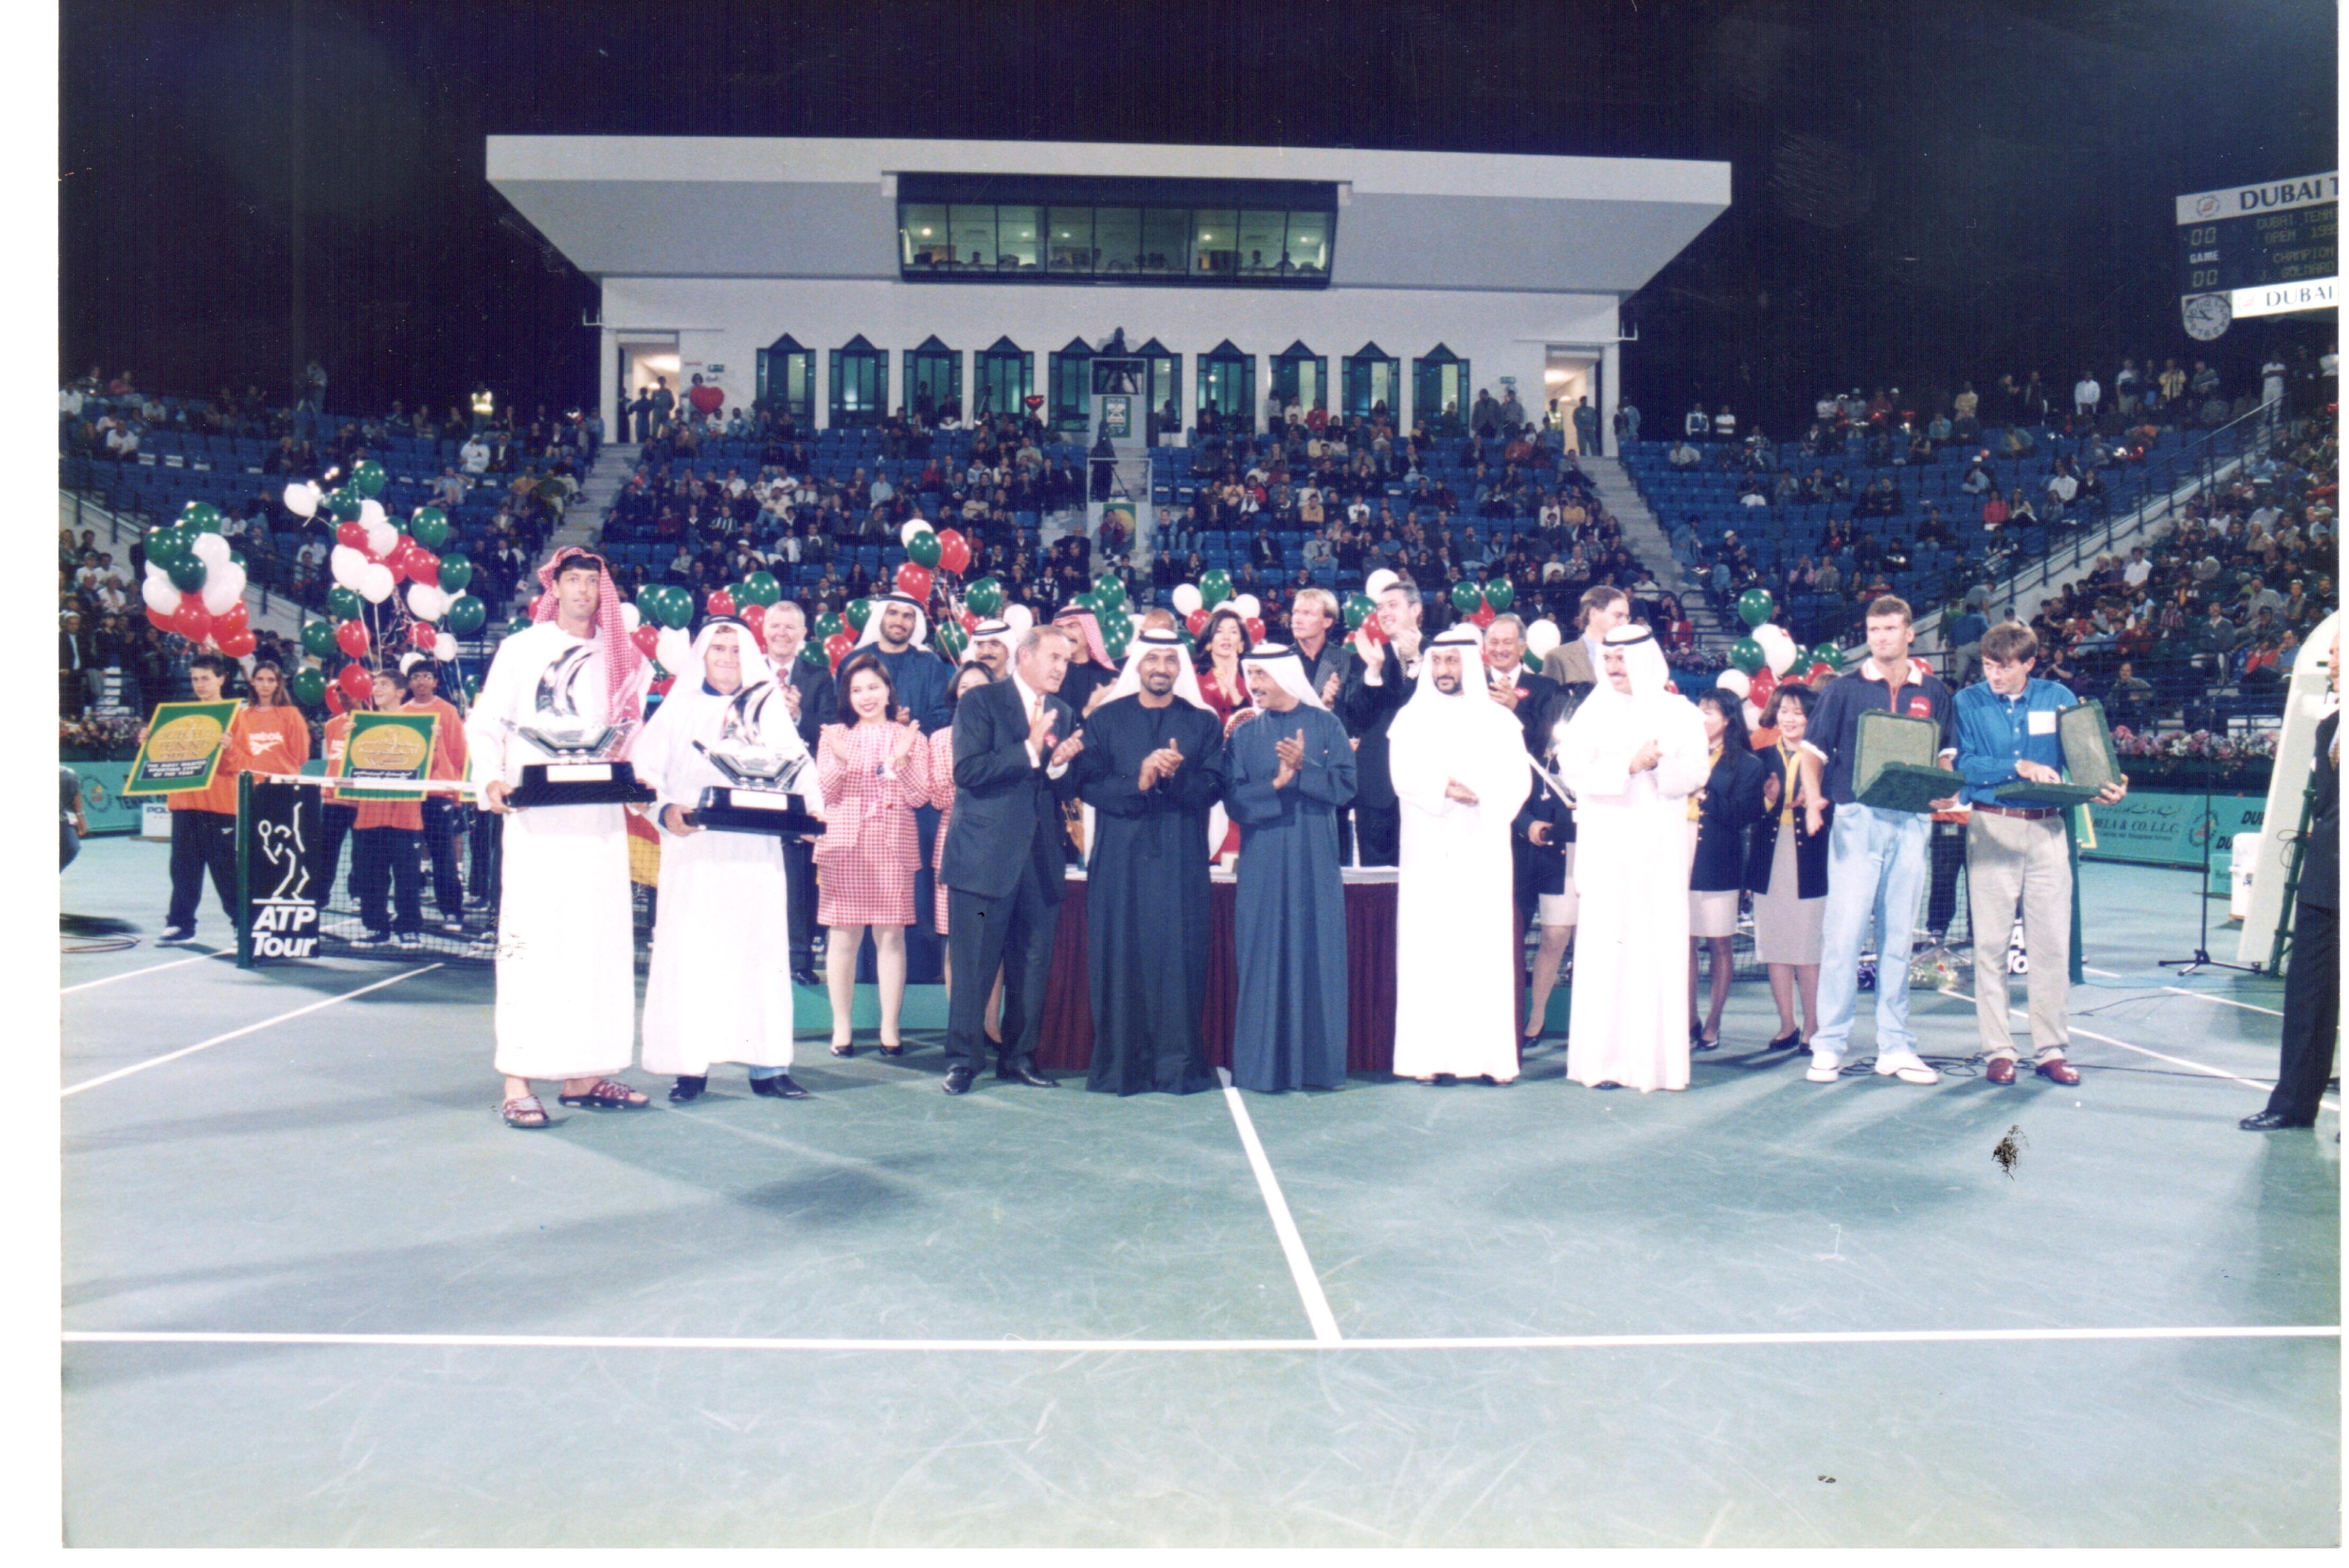 Dubai Tennis Stadium: History, Capacity, Events & Significance